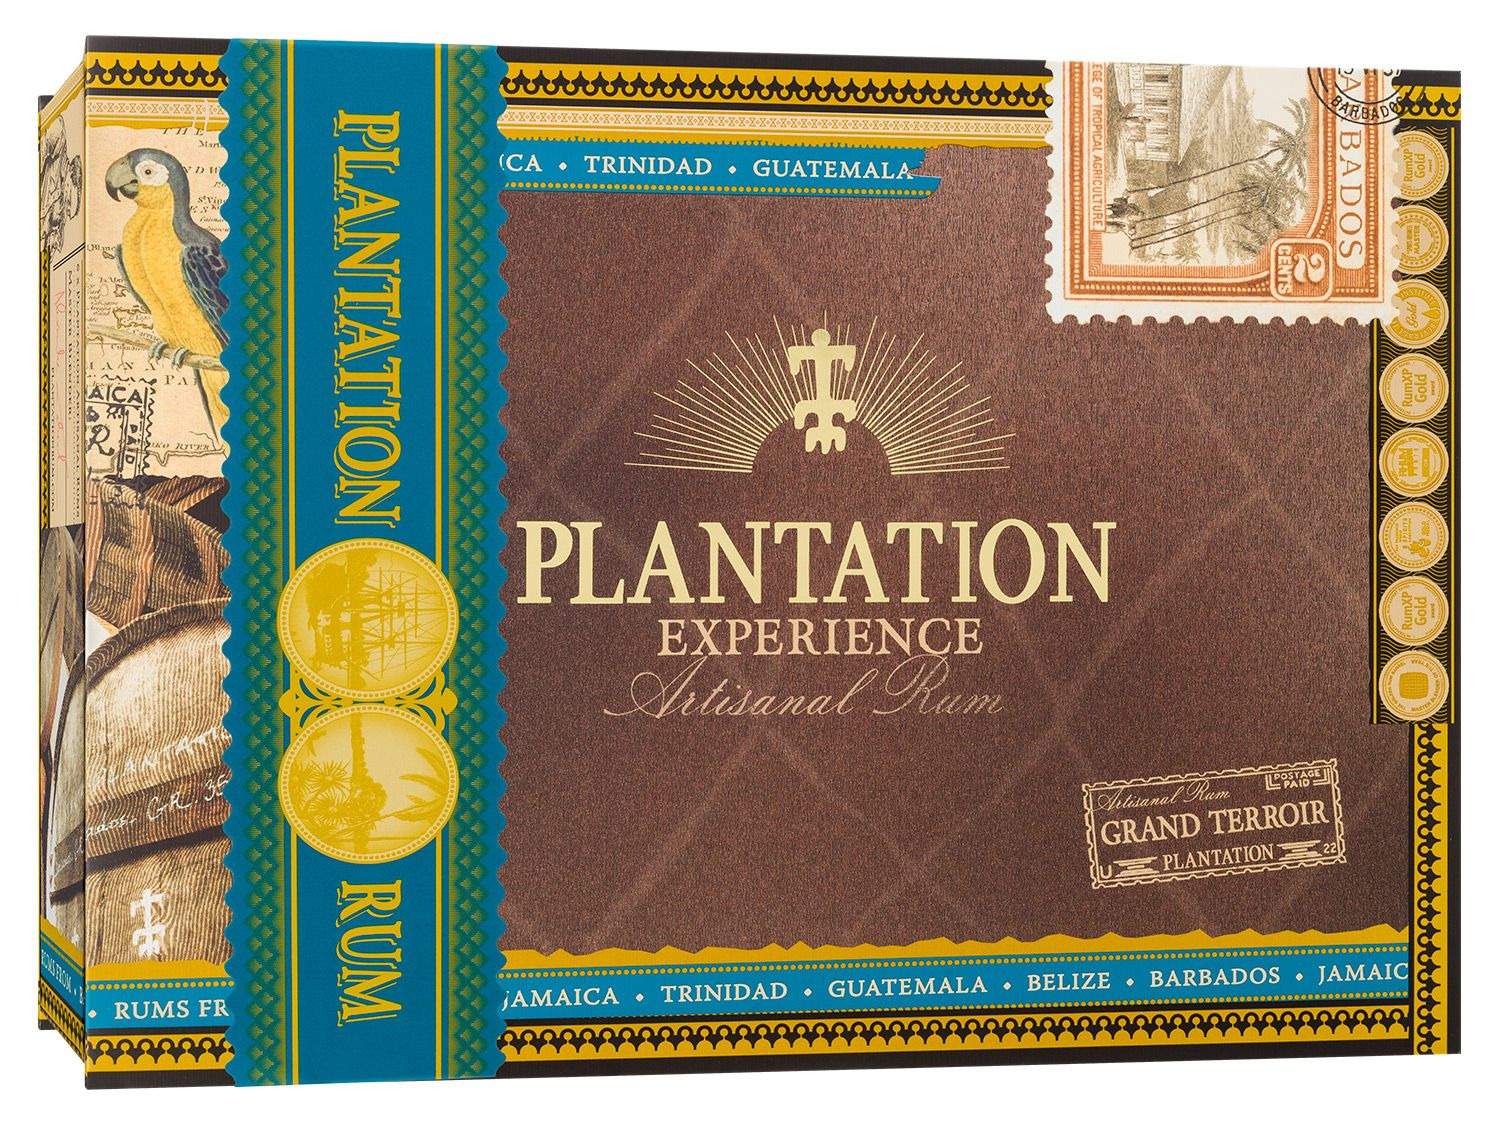 Vol Rum x Plantation 40-43 0,1l, 6 Experience-Box %